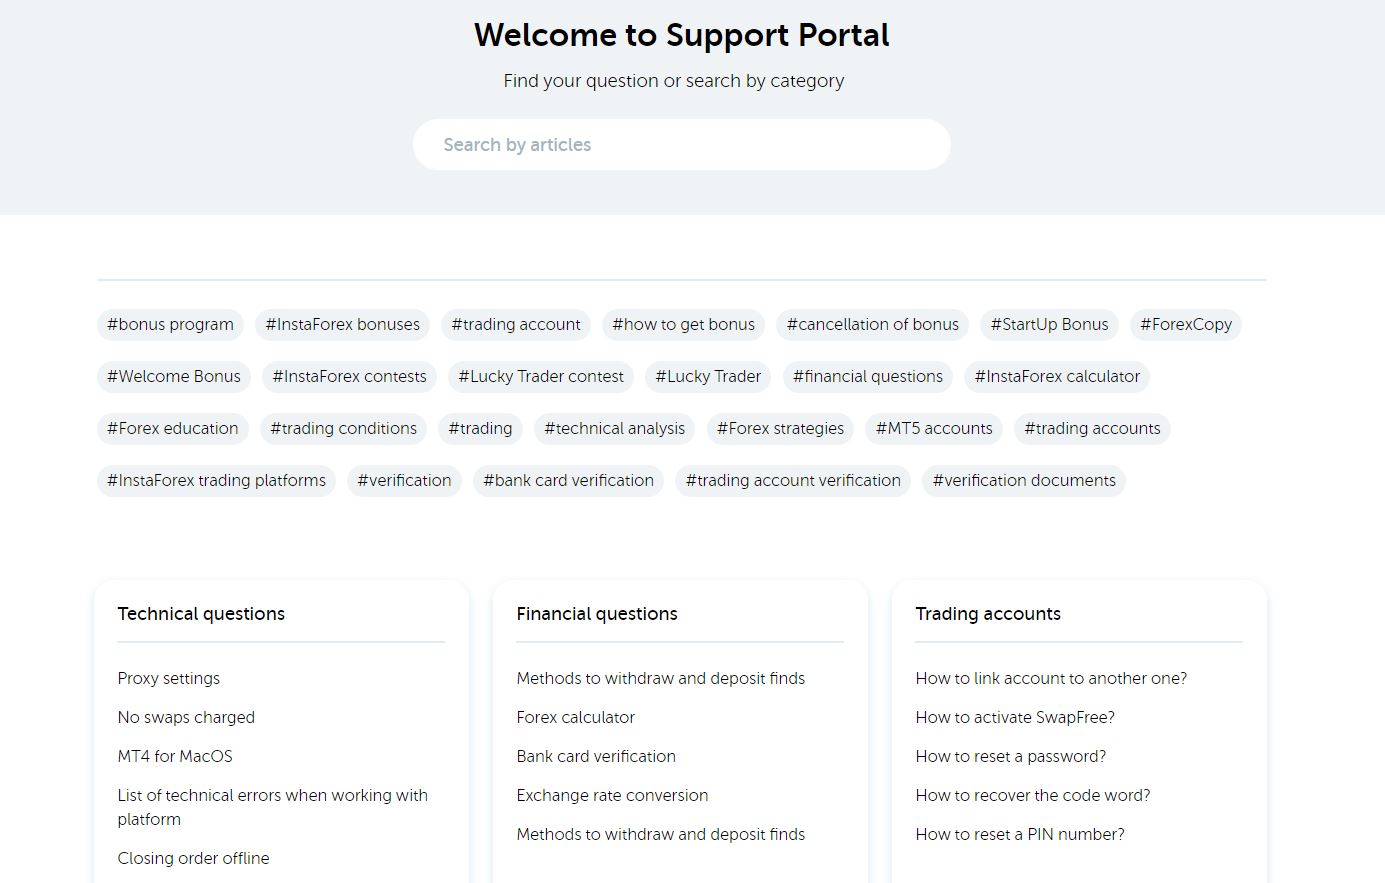 InstaForex’s help portal